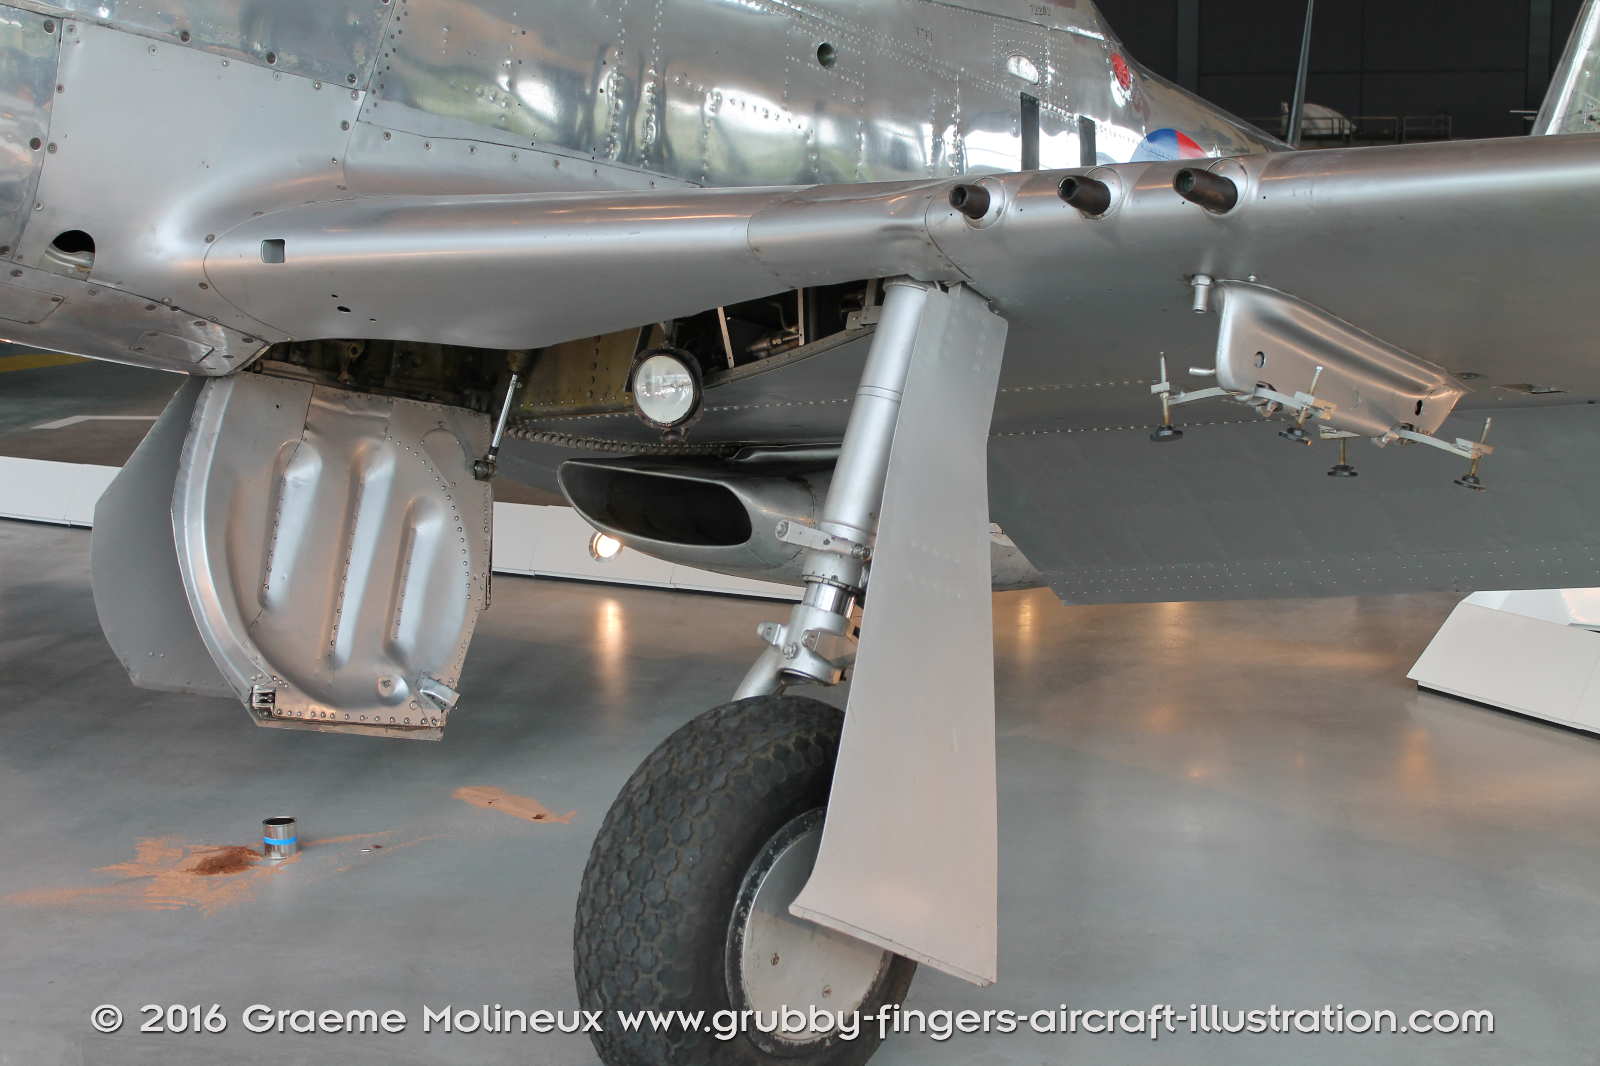 NAA_P-51D_Mustang_Walkaround_H-307_Dutch_Air_Force_2015_17_GraemeMolineux